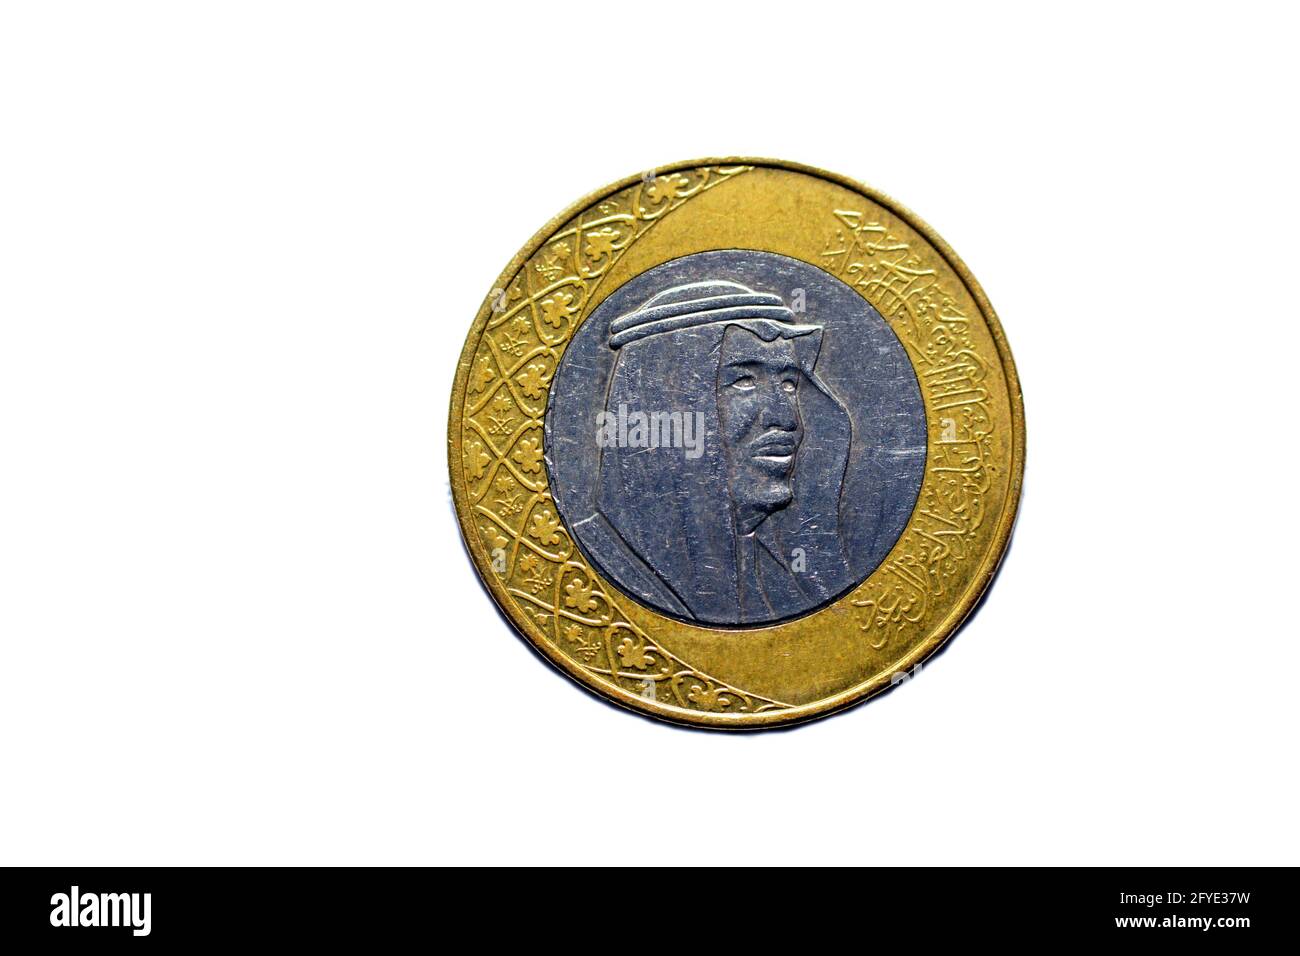 Una moneta riyal dell'Arabia Saudita (lato opposto) anno 2016, una moneta riyal del metallo e una banconota insieme, 1 moneta riyal Saudita con lo slogan del re Salman Foto Stock